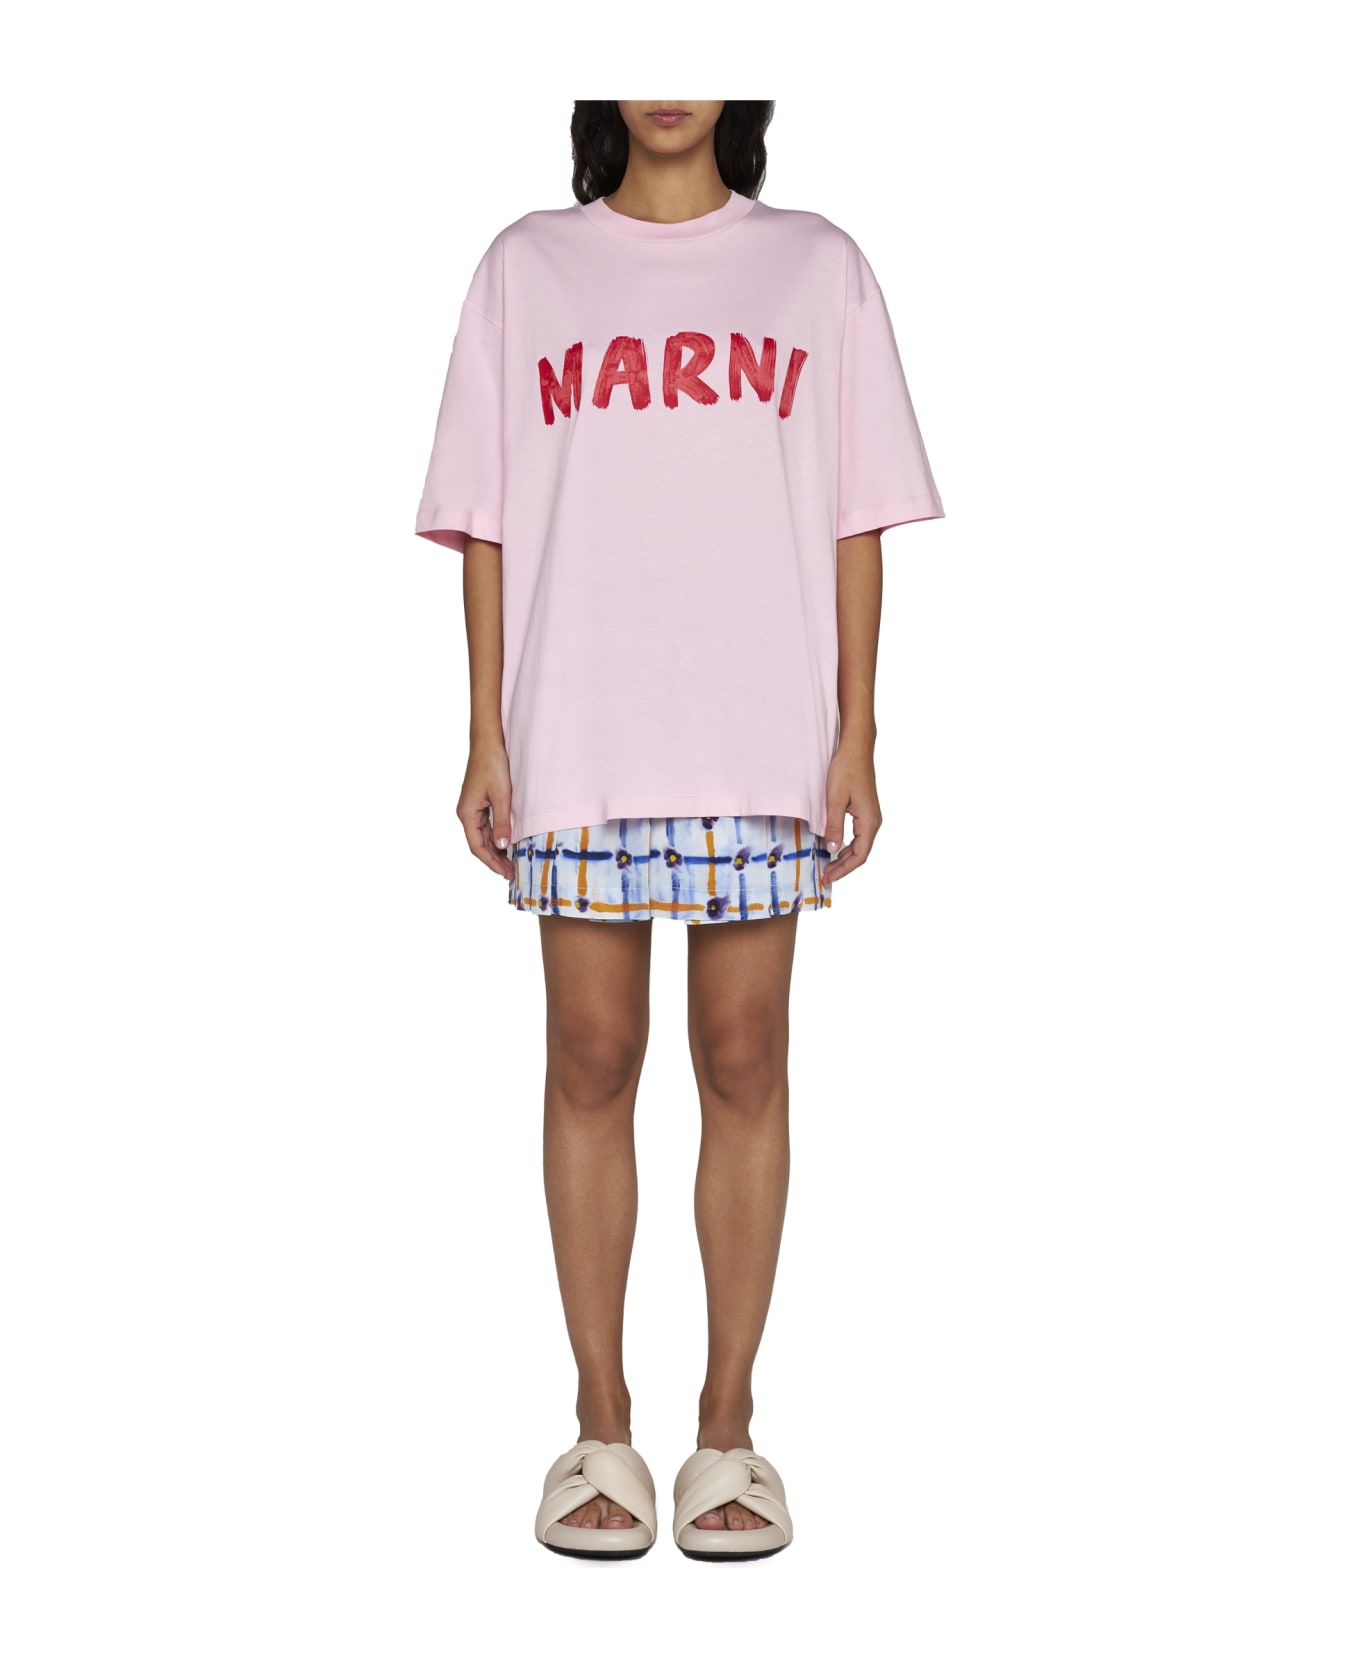 Marni T-Shirt - Cinder rose Tシャツ